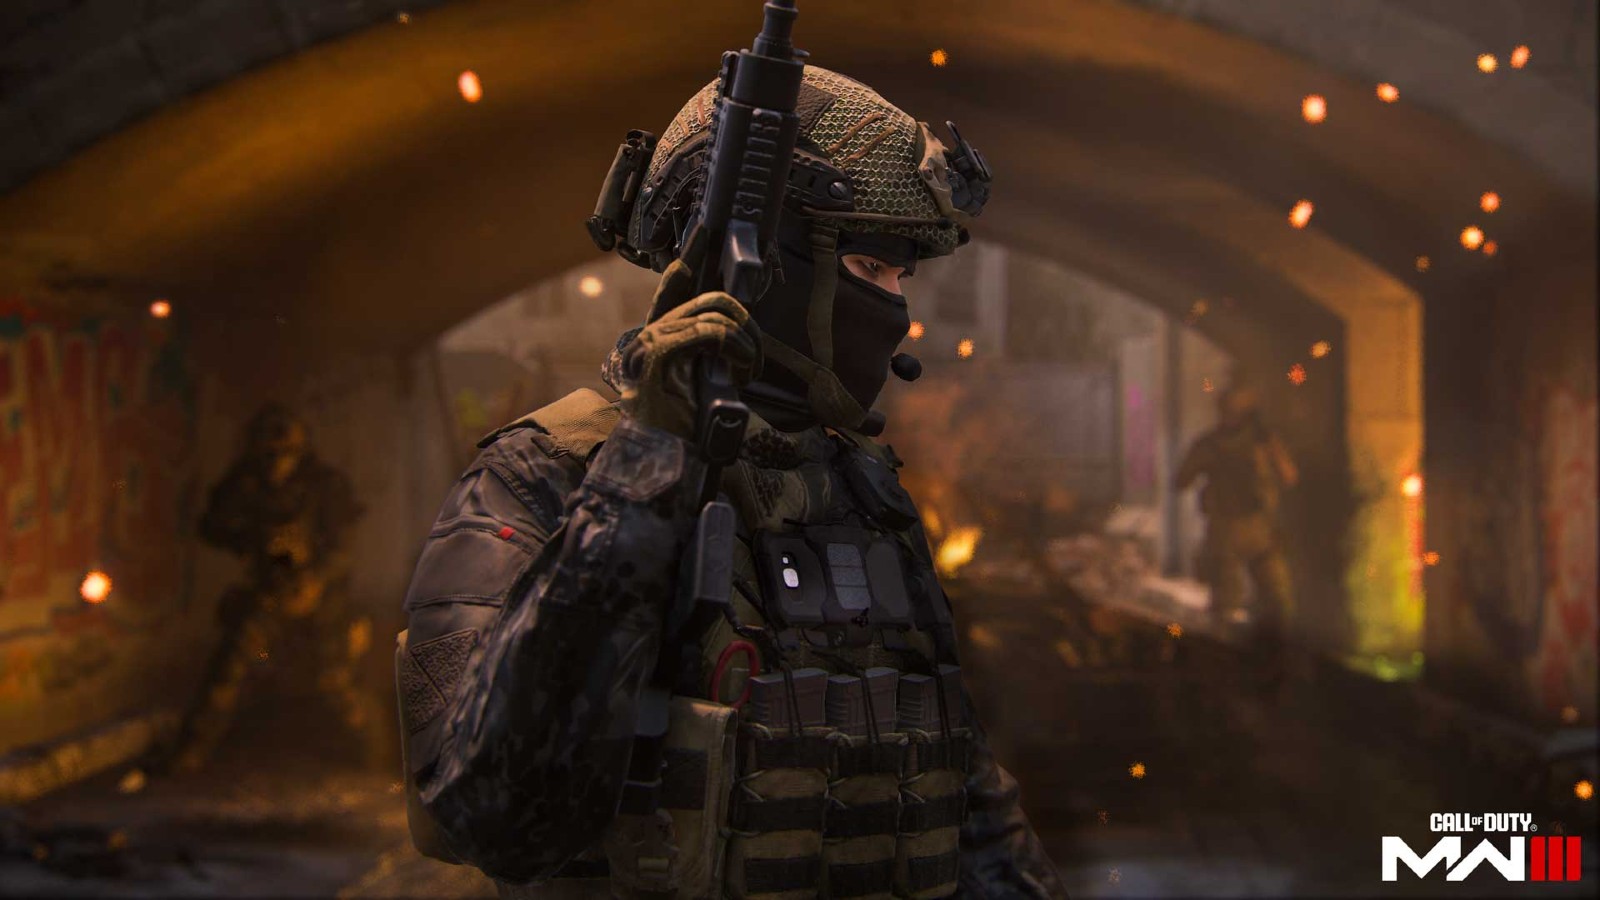 Announcement: Call of Duty: Modern Warfare III Campaign Details